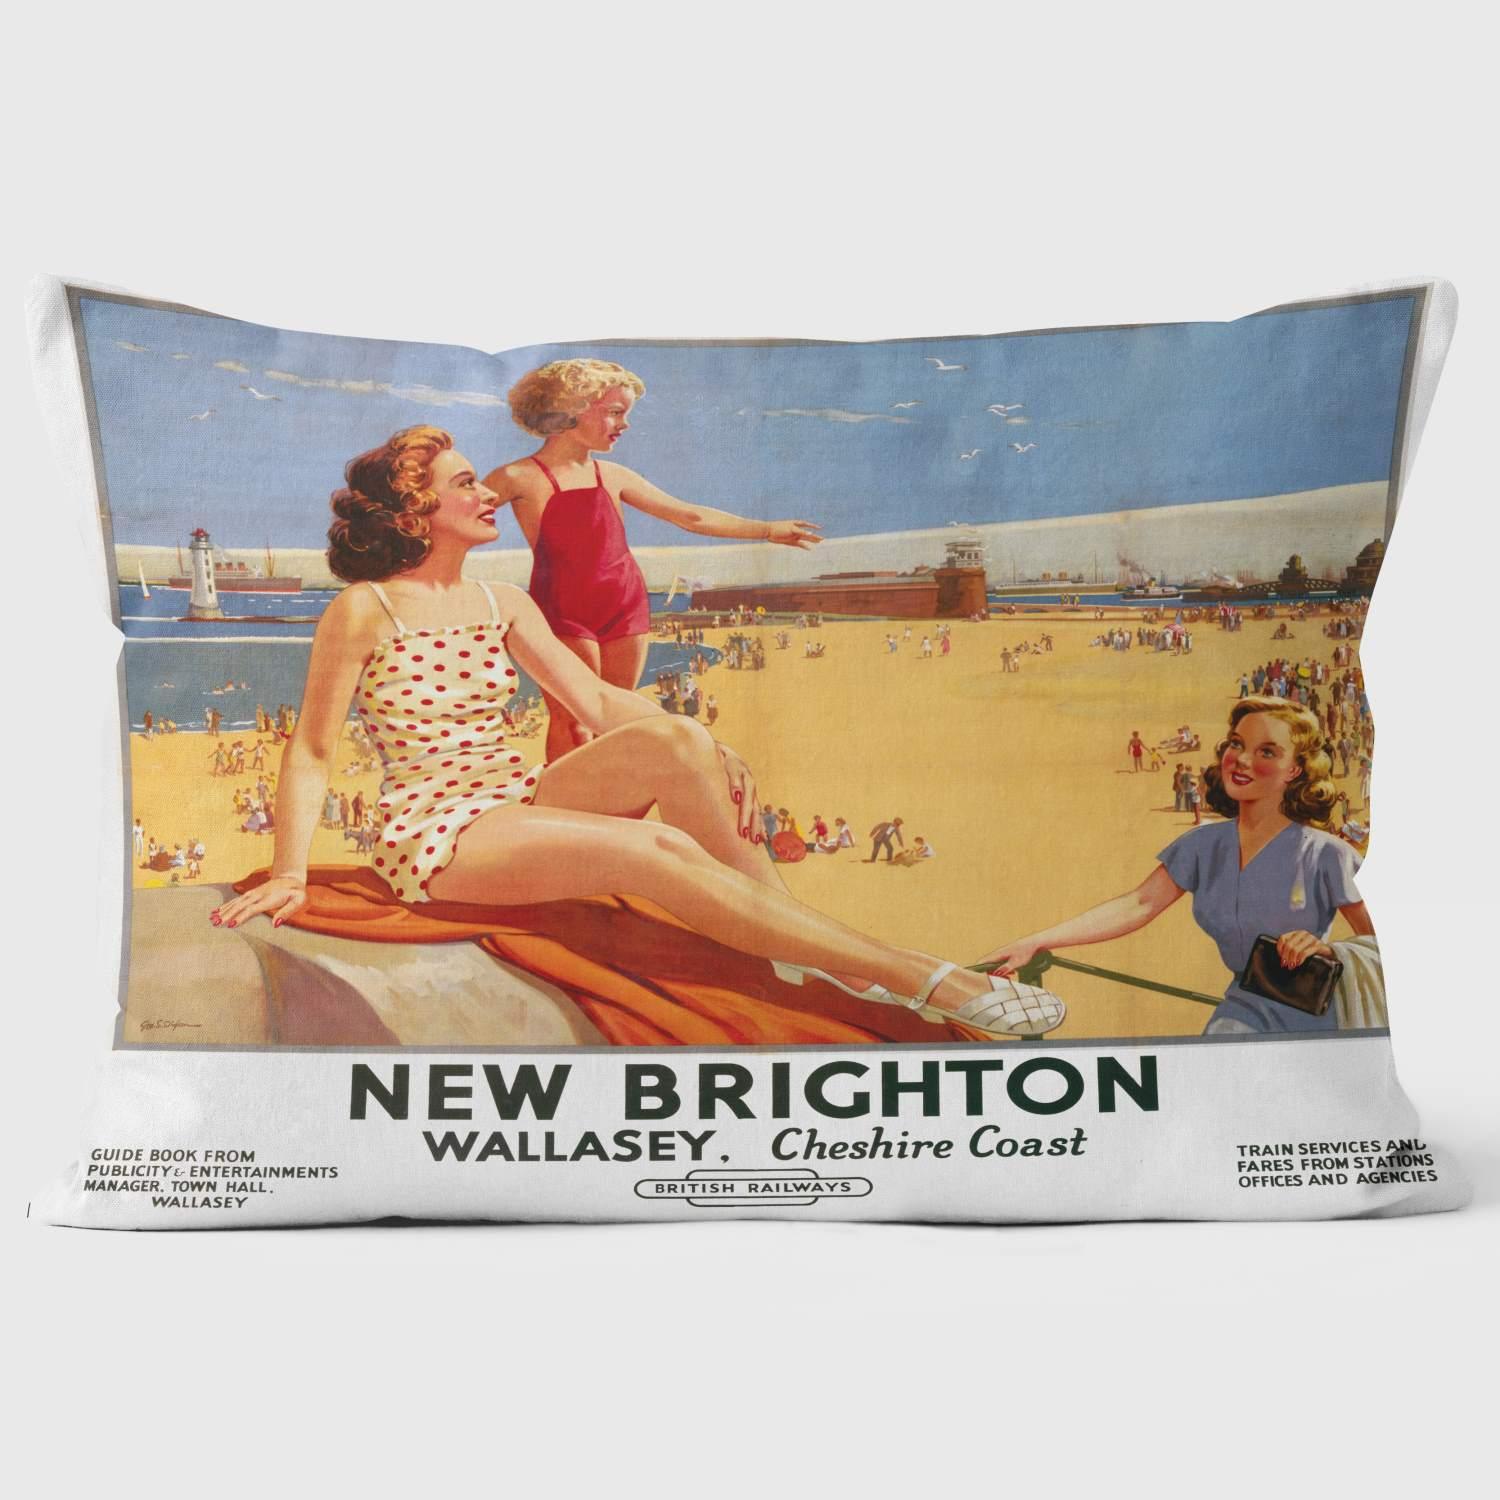 New Brighton - Wallasey Cheshire Coast' BR (LMR) 1949 - National Railway Museum Cushion - Handmade Cushions UK - WeLoveCushions